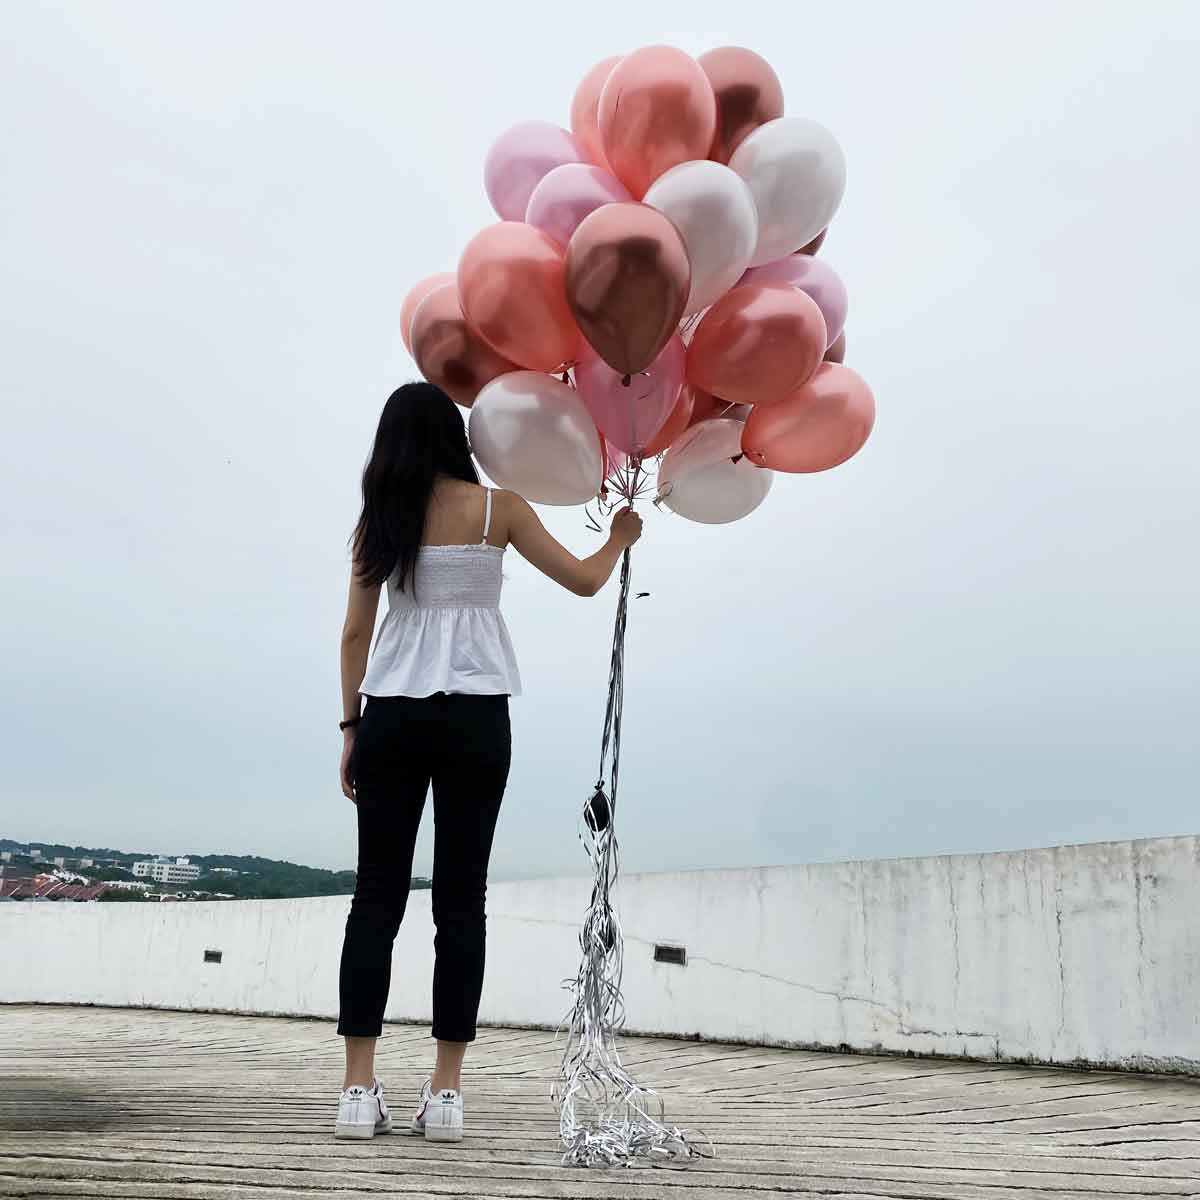 helium-balloon-bouquet